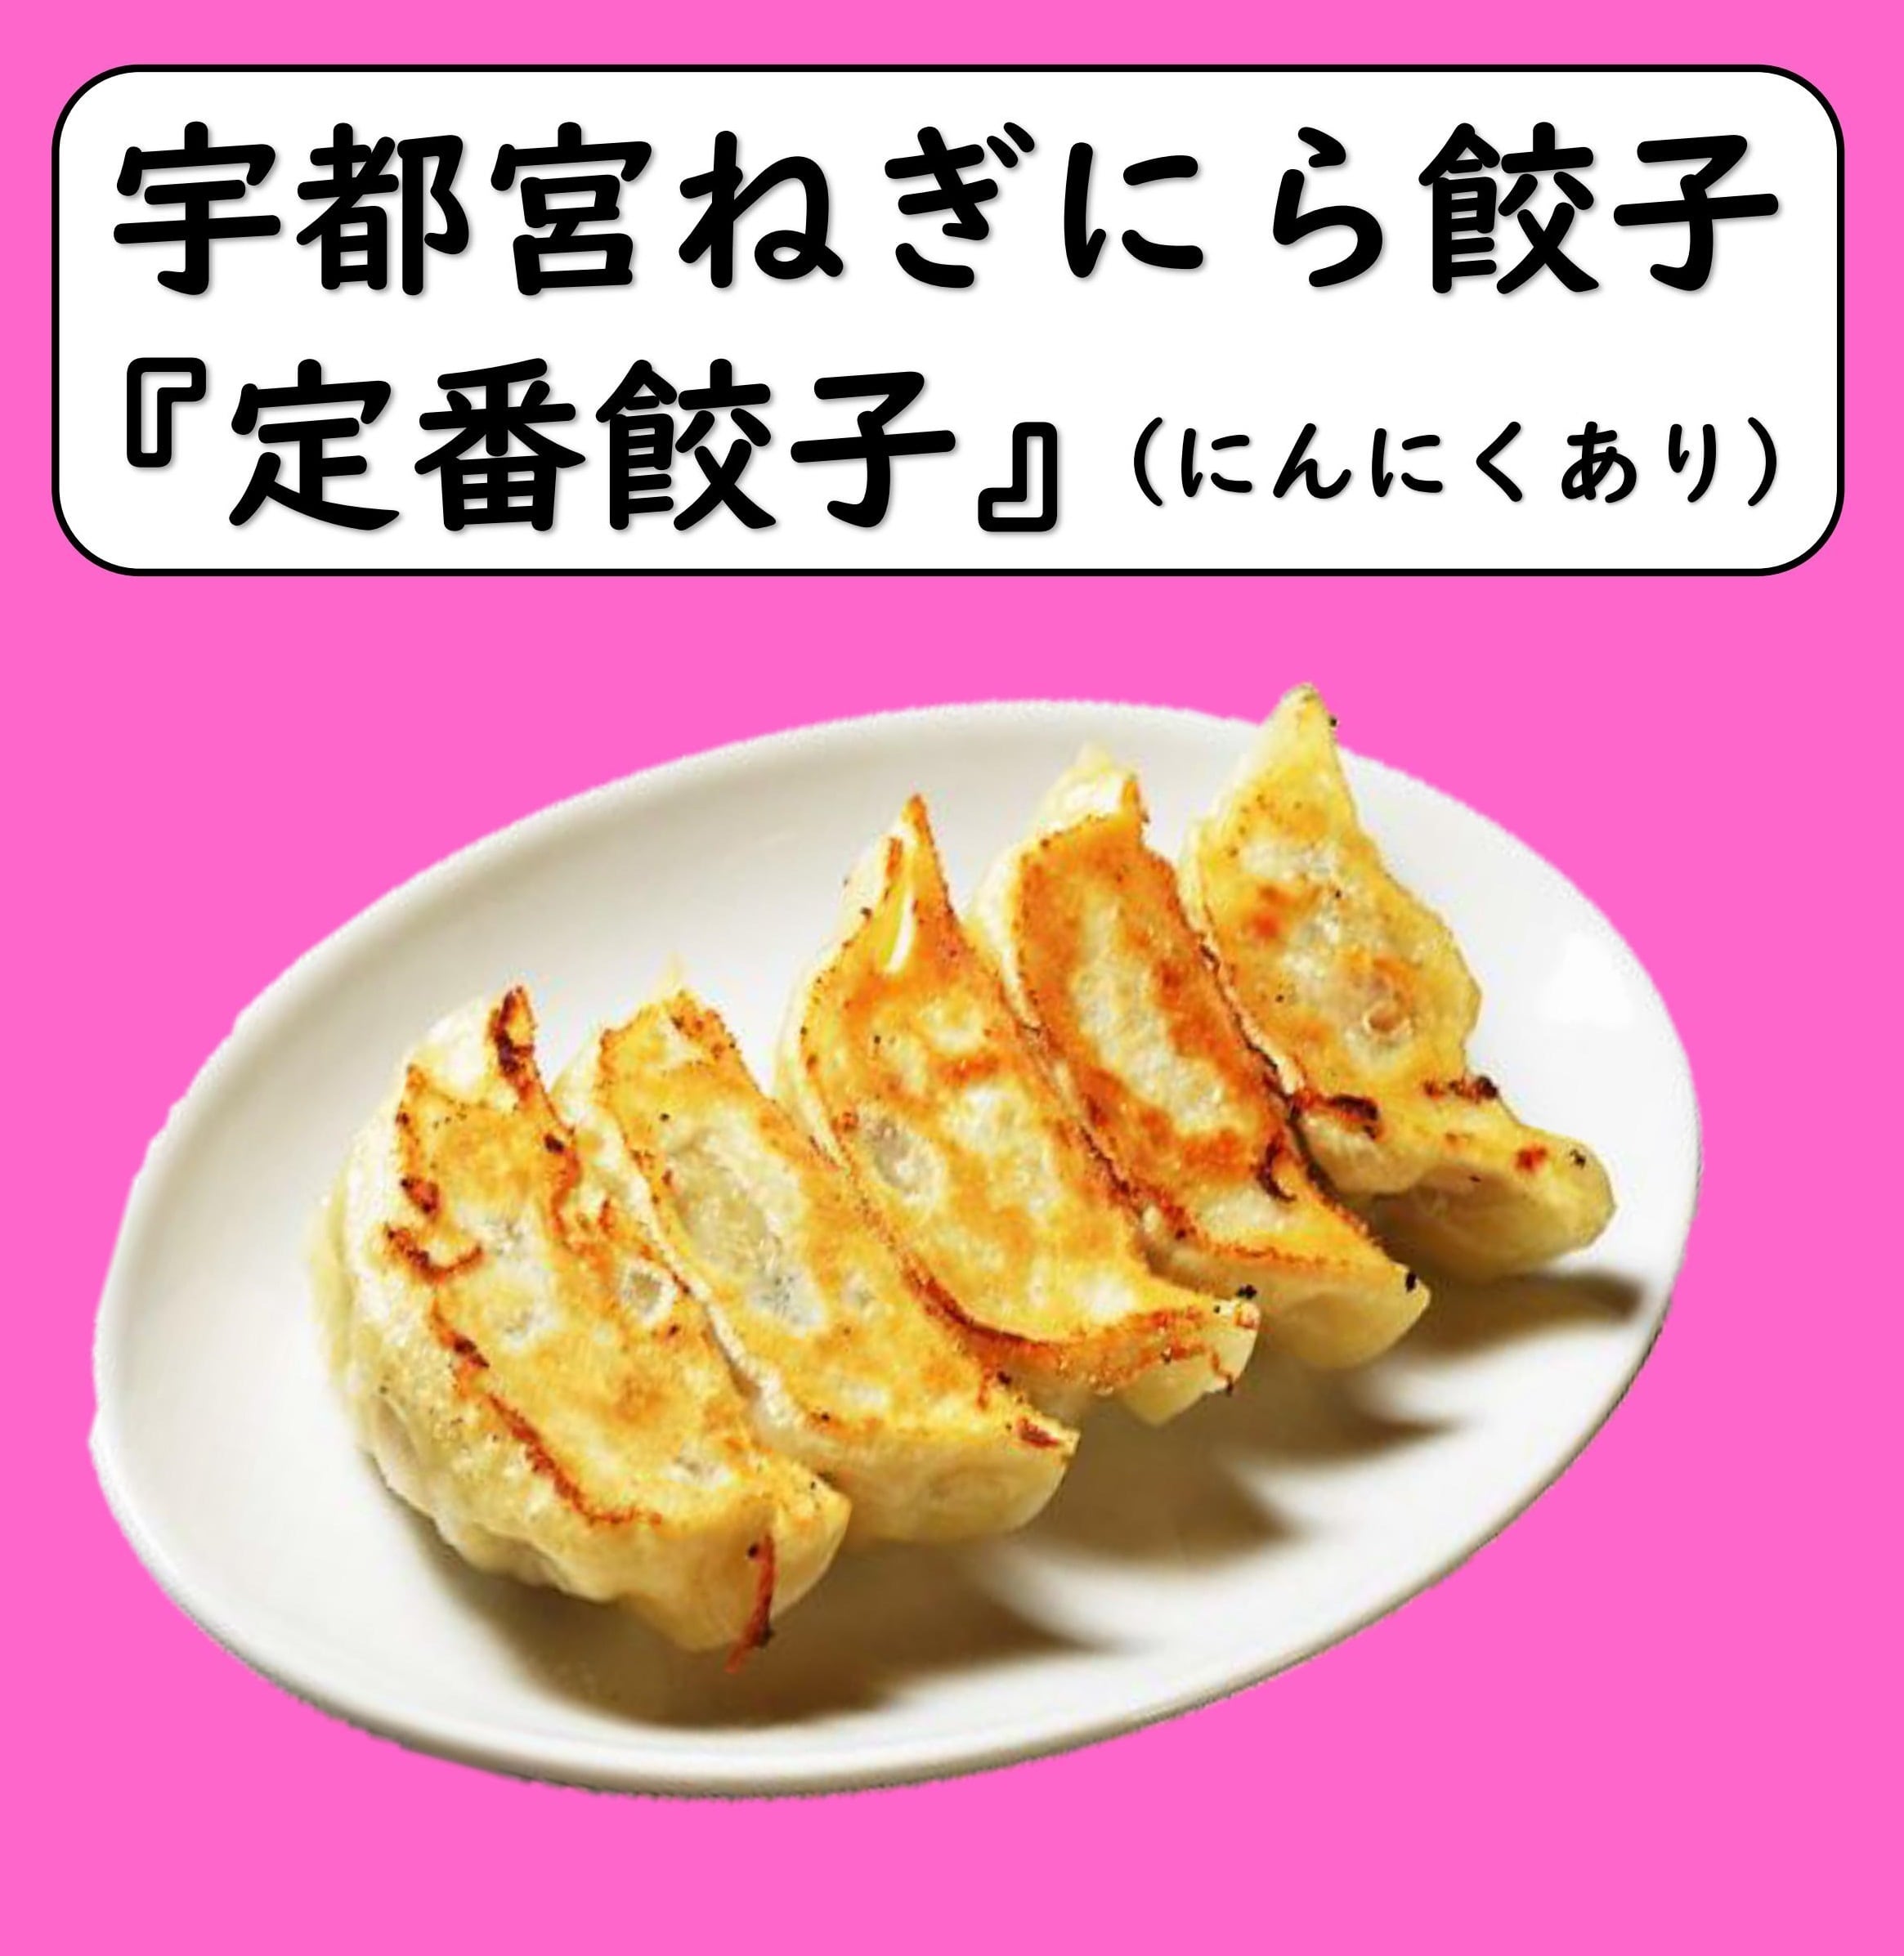 Neginira　Gyoza　Utsunomiya　冷凍　定番餃子（にんにくあり）　【80個】宇都宮ねぎにら餃子　MINTEN